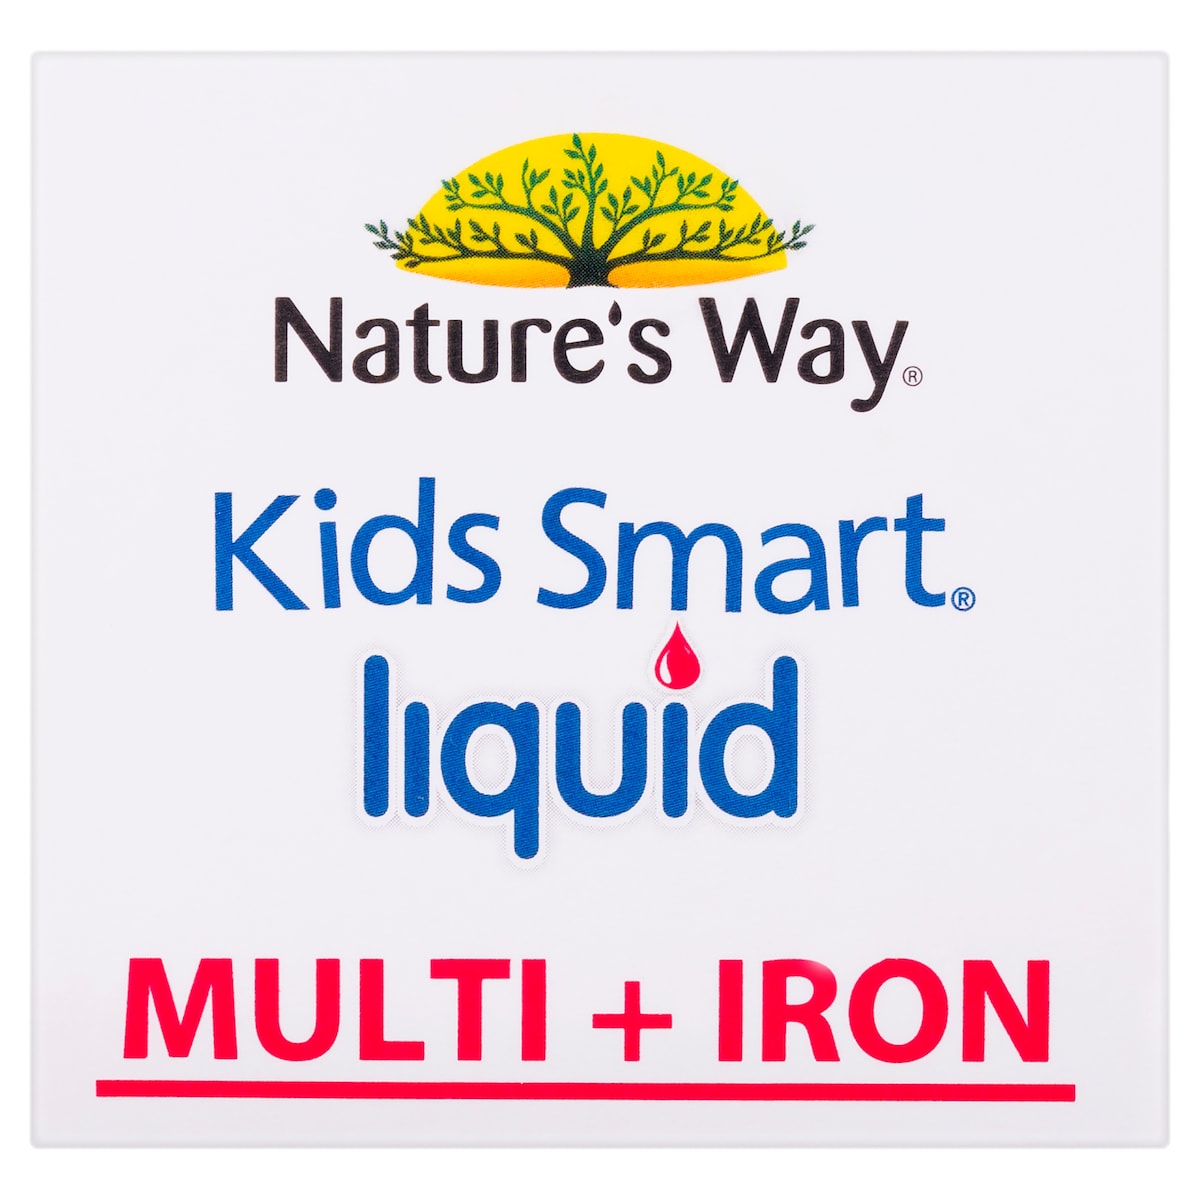 Natures Way Kids Smart Liquid Multi + Iron 200ml